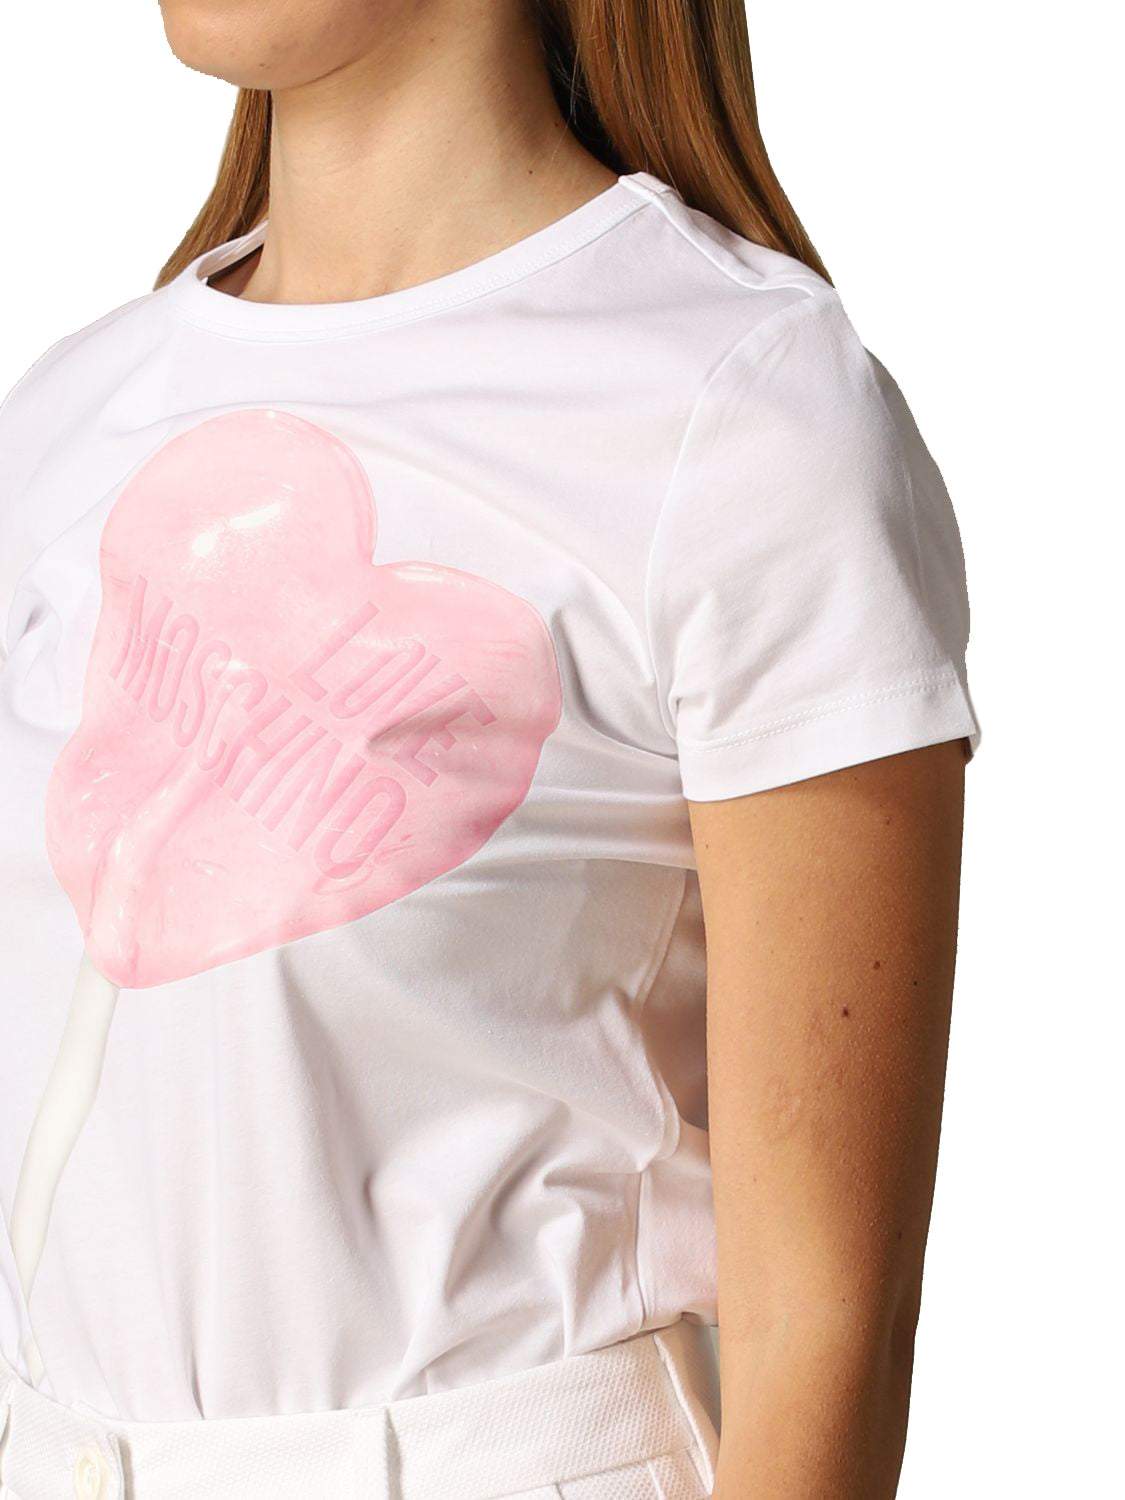 Love Moschino White Cotton Tops & T-Shirt feed-1, IT40|S, IT42|M, IT44|L, Love Moschino, Tops & T-Shirts - Women - Clothing, White at SEYMAYKA